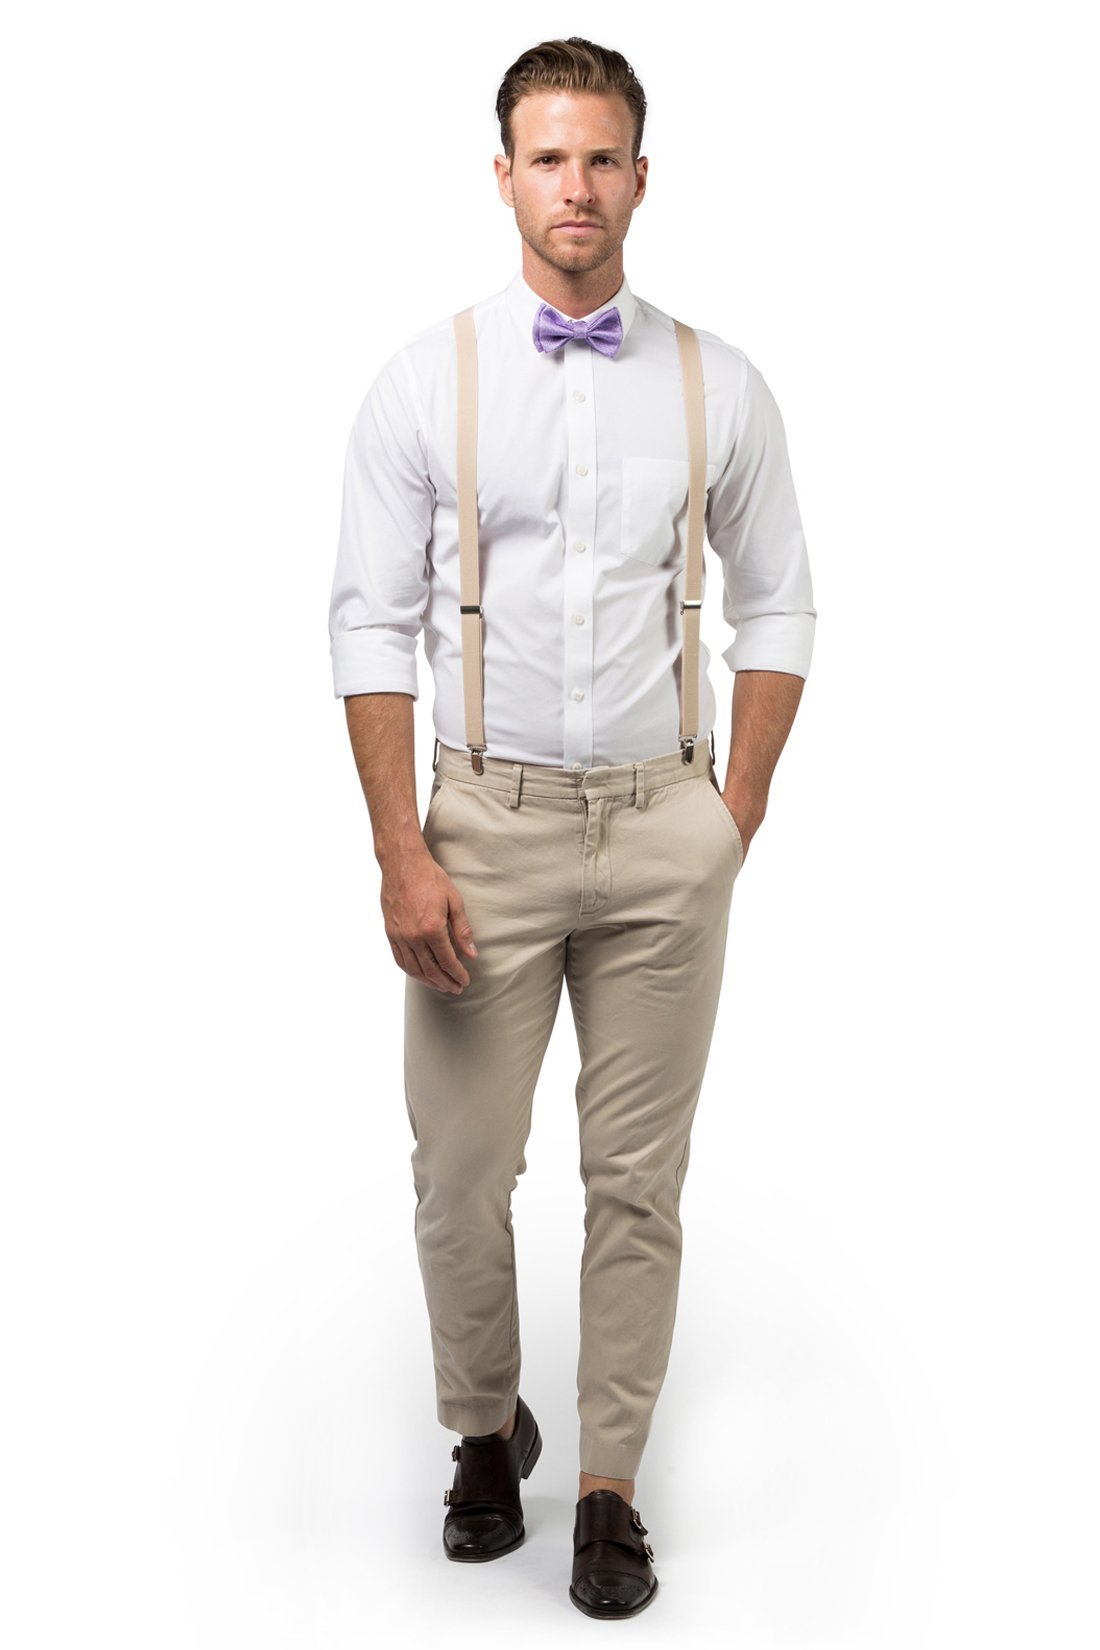 Beige Suspenders & Purple Bow Tie